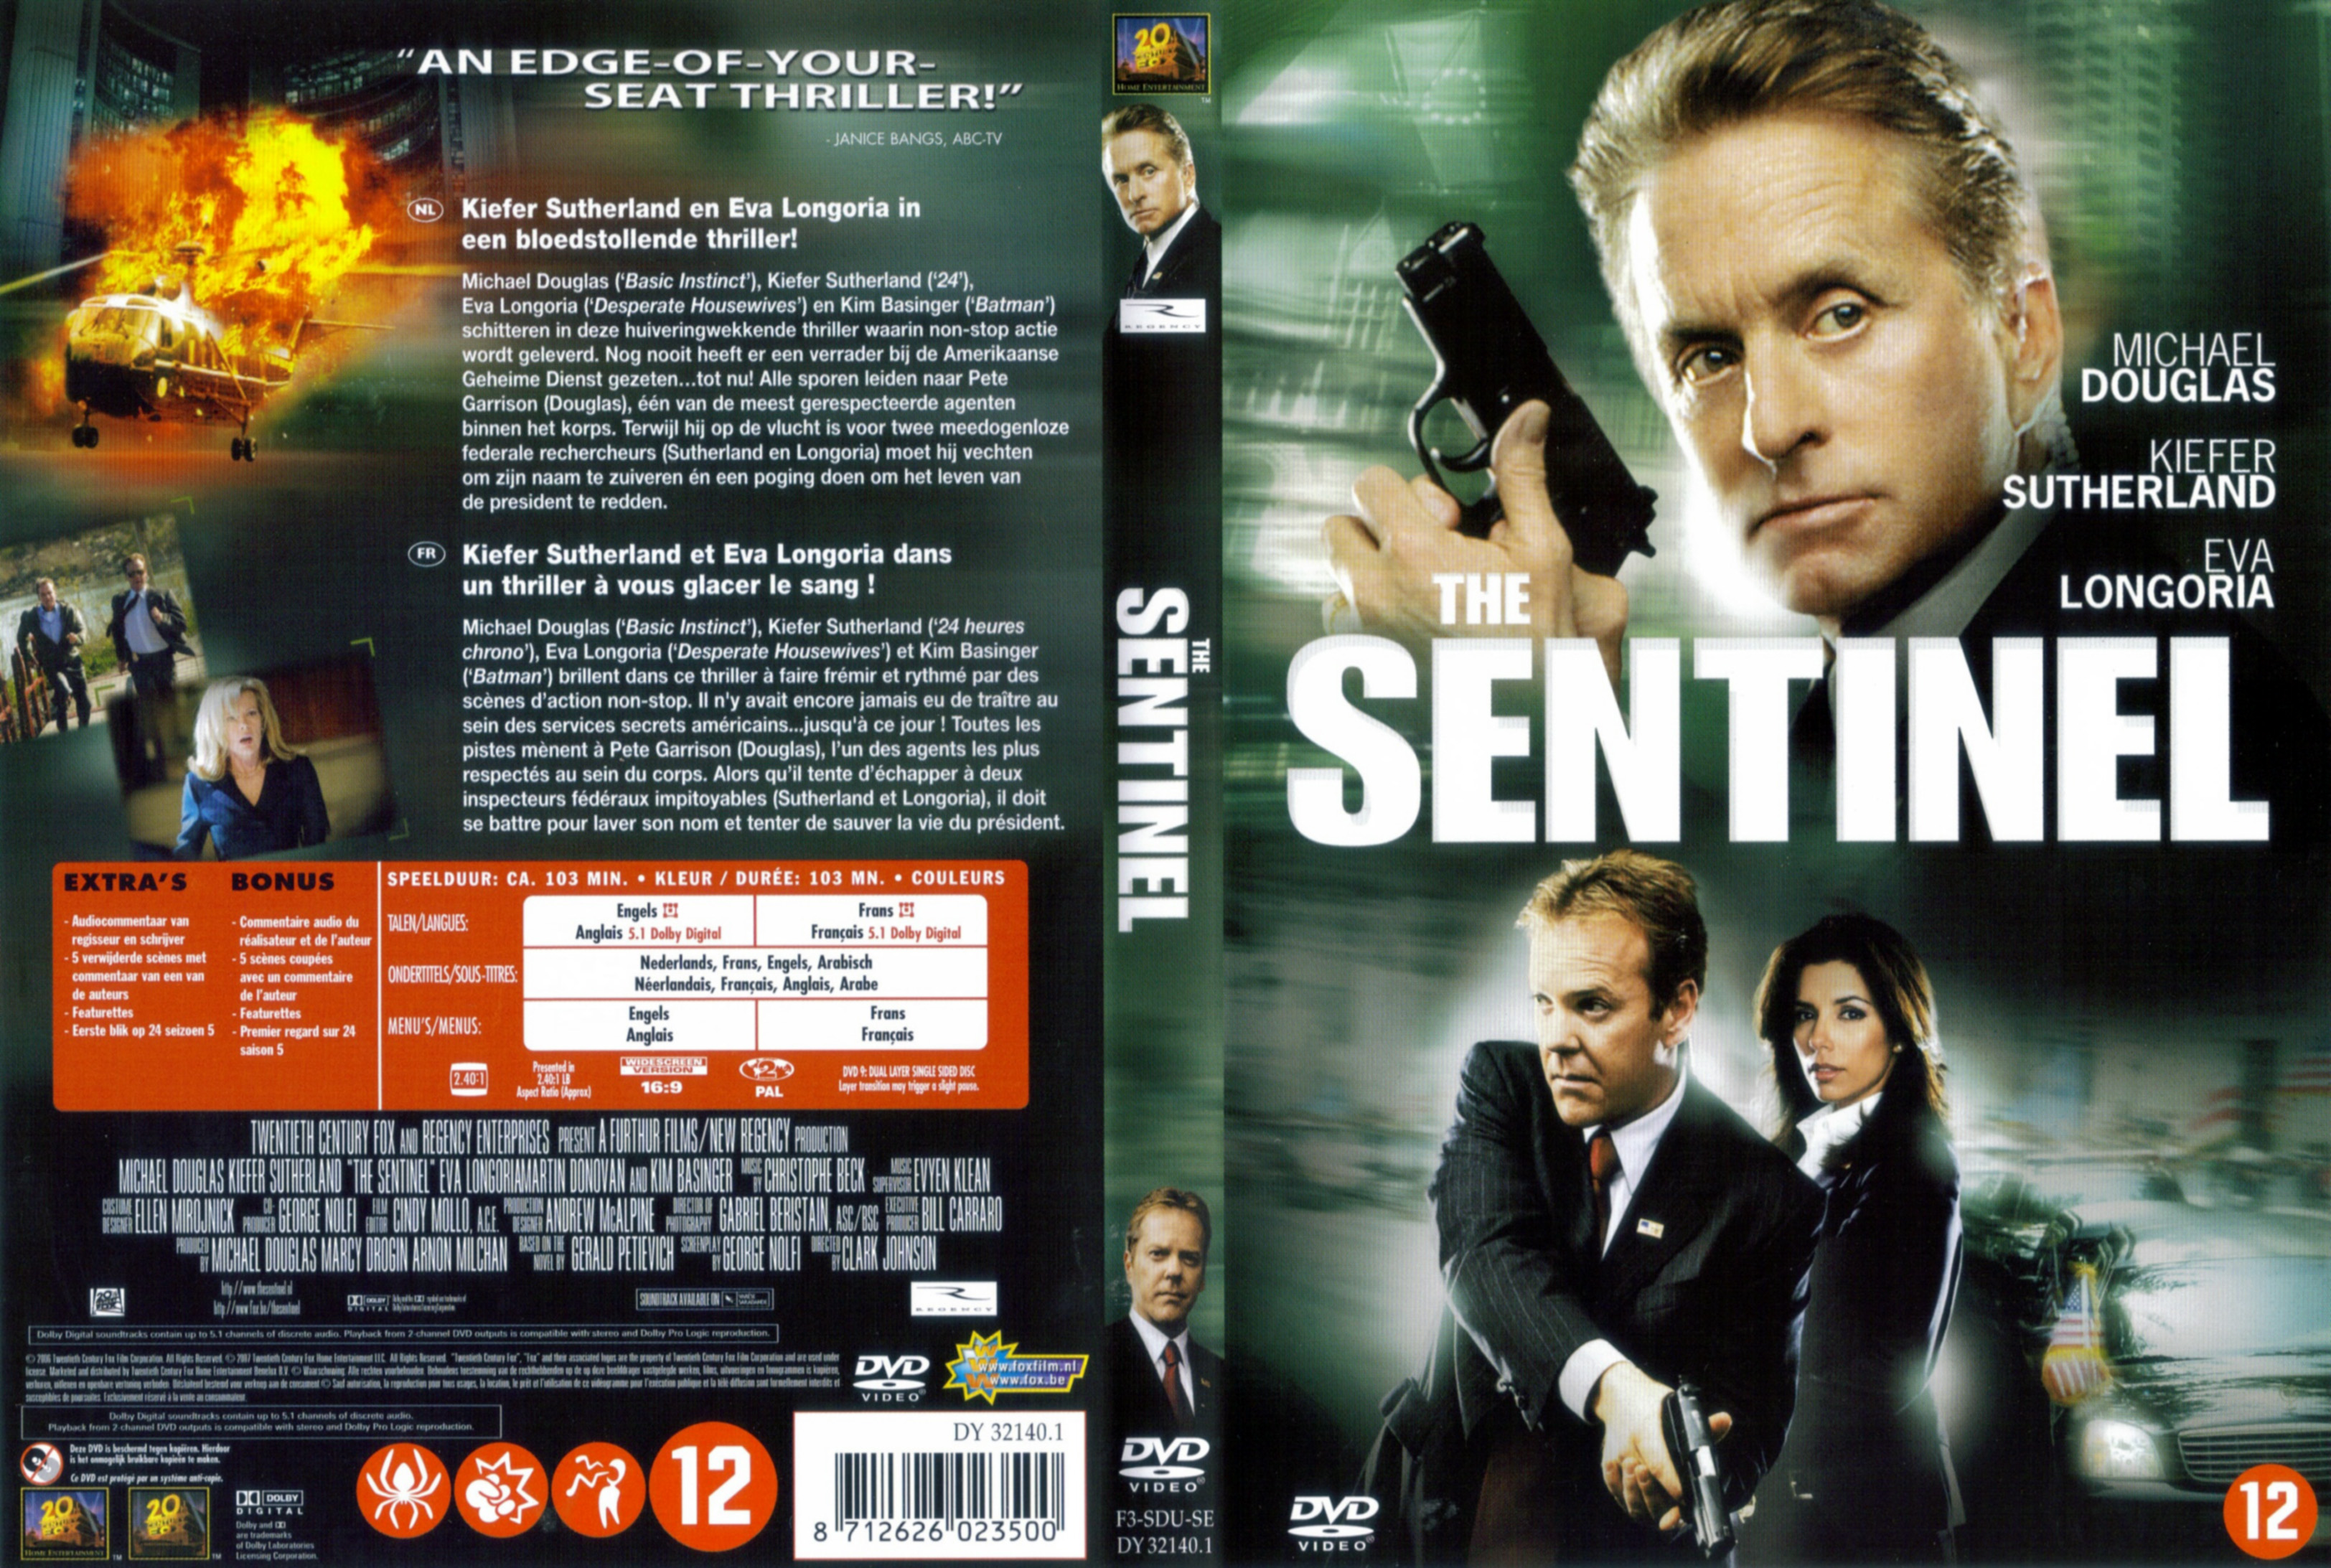 Jaquette DVD The sentinel v2